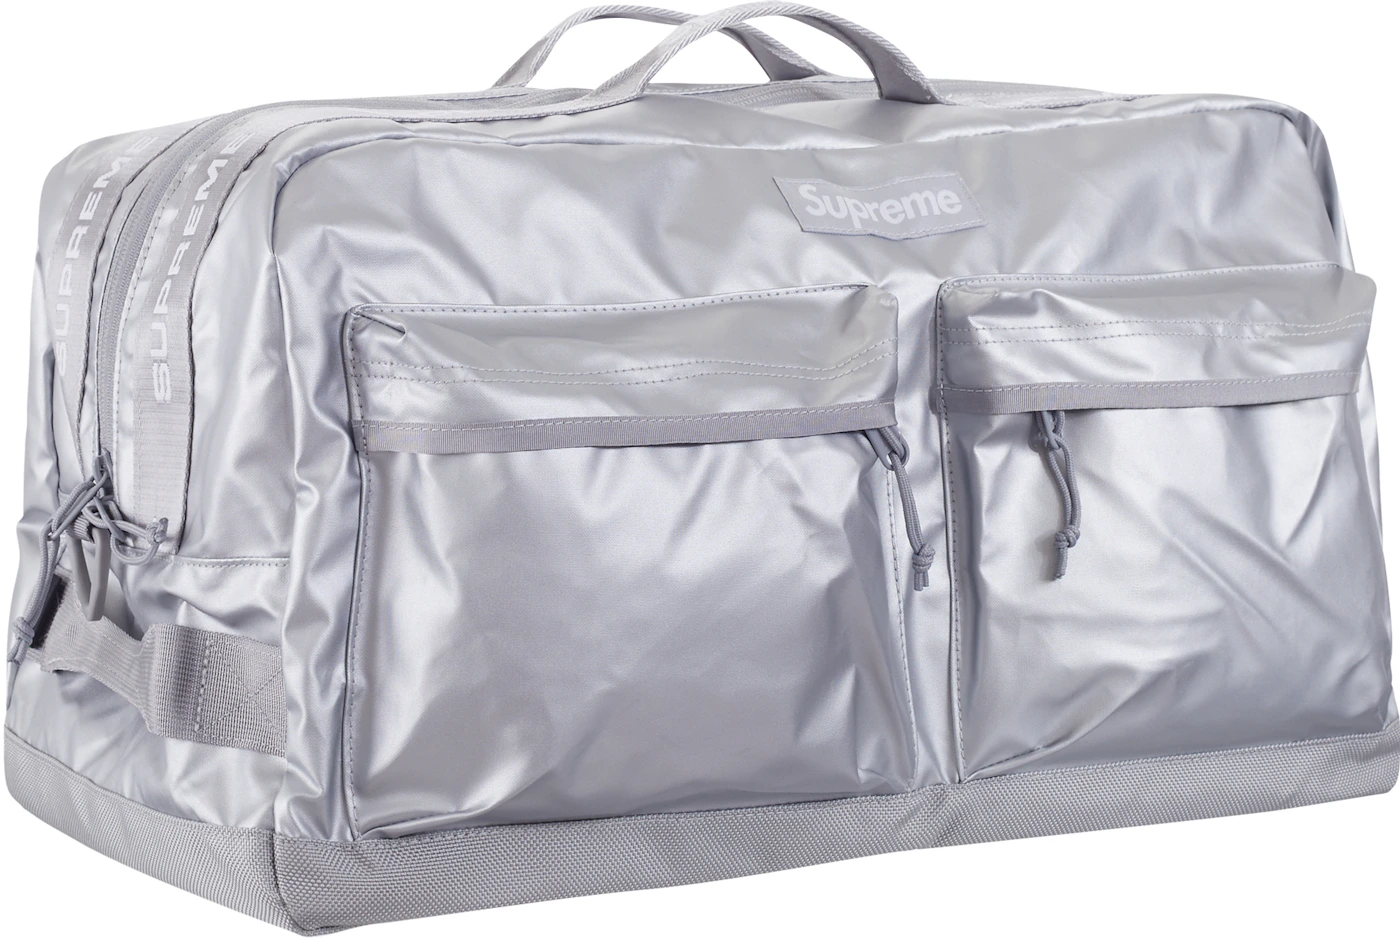 Silver Metallic Stainless Steel Pattern Duffle Bag by DEC02